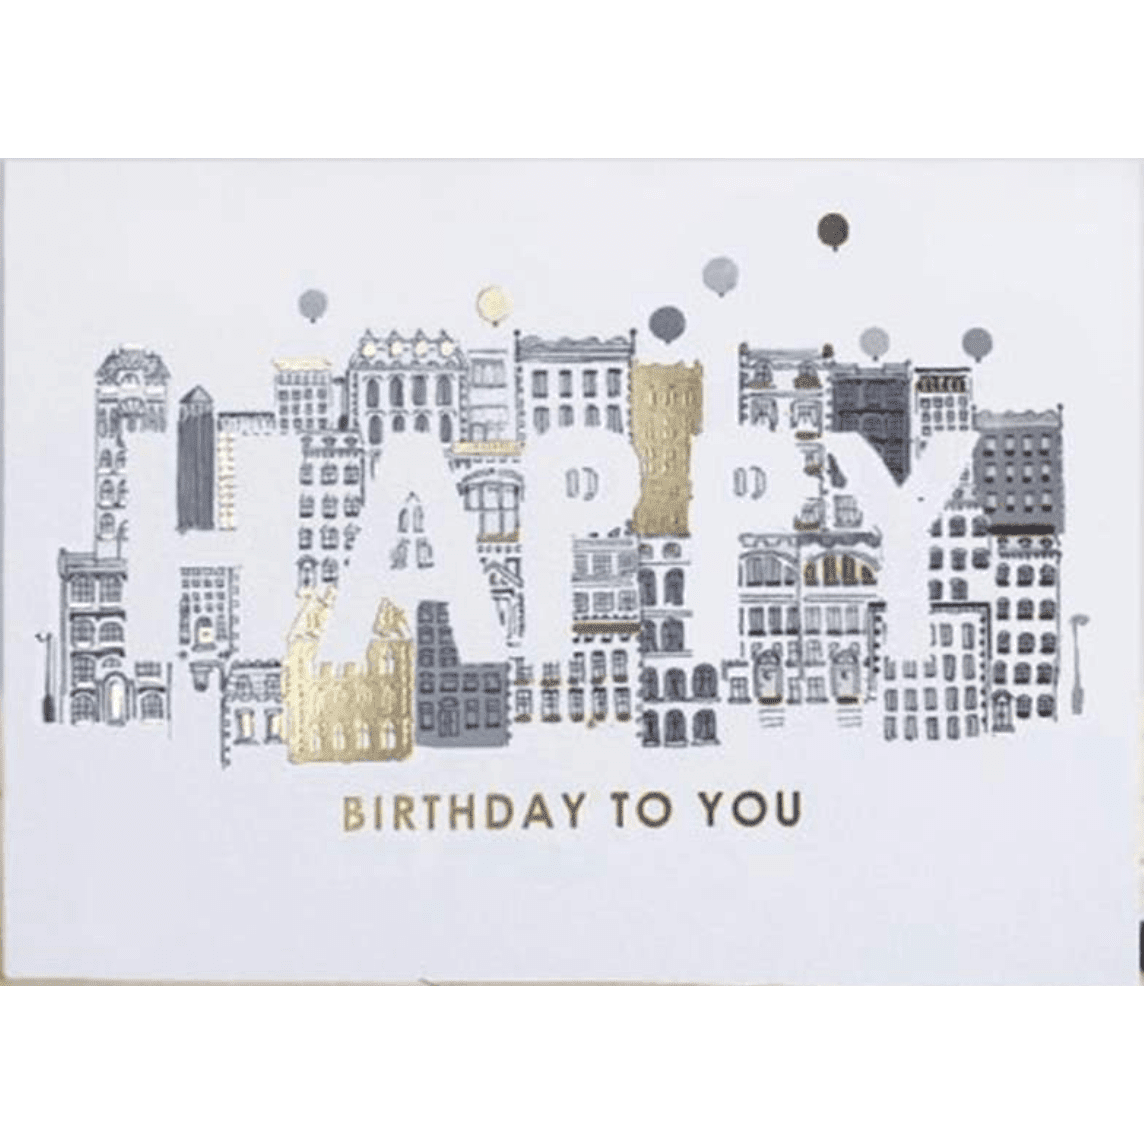 Happy Birthday to You - Greeting Card - Birthday